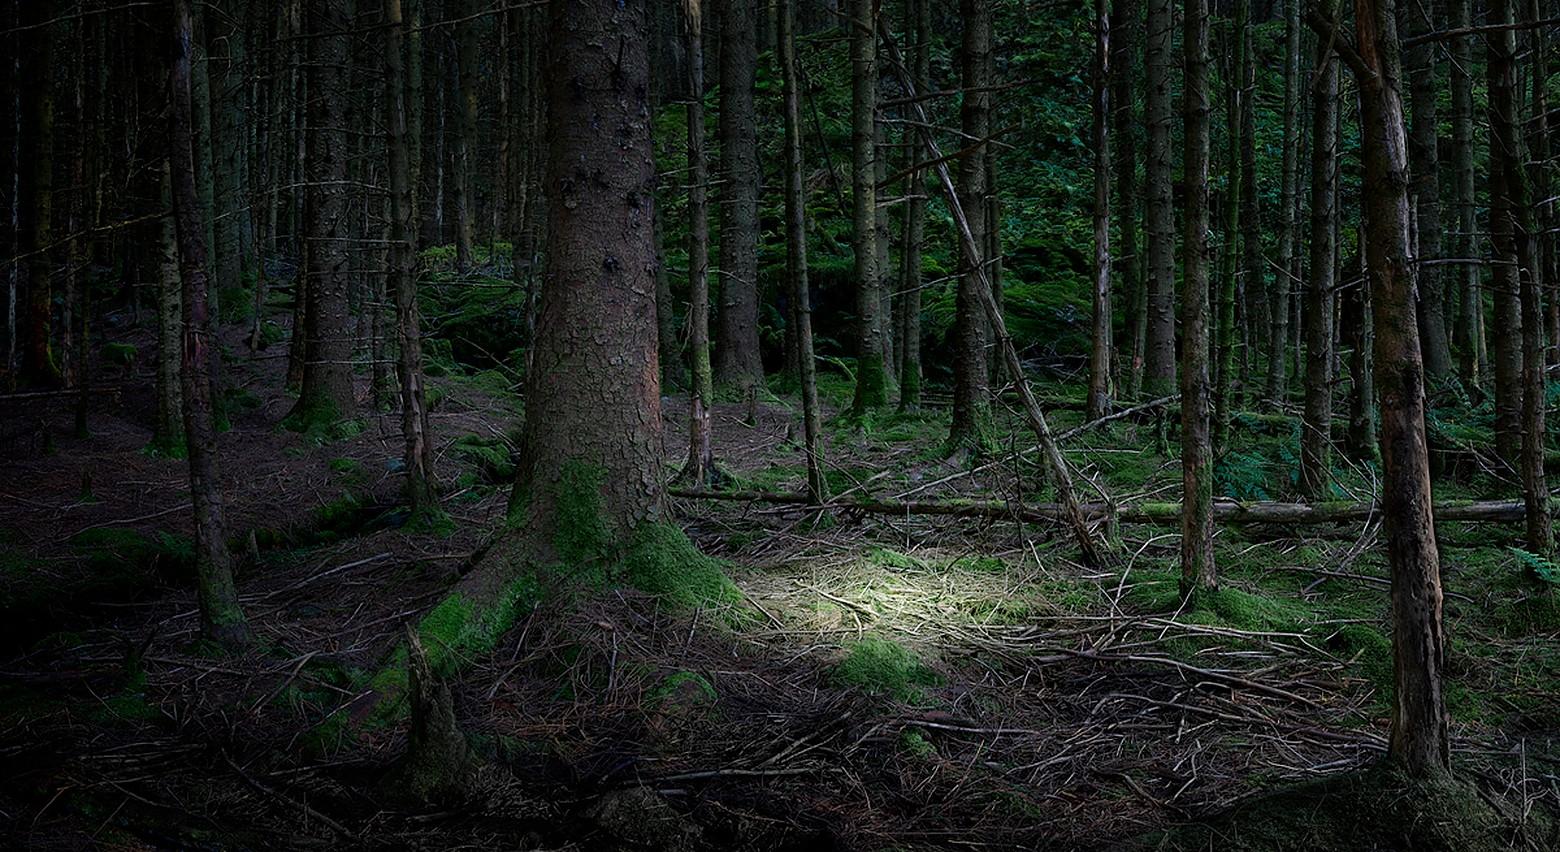 The Gloaming 4 - Ellie Davies, Natur, Fotografie, Bäume, Landschaft, Wälder